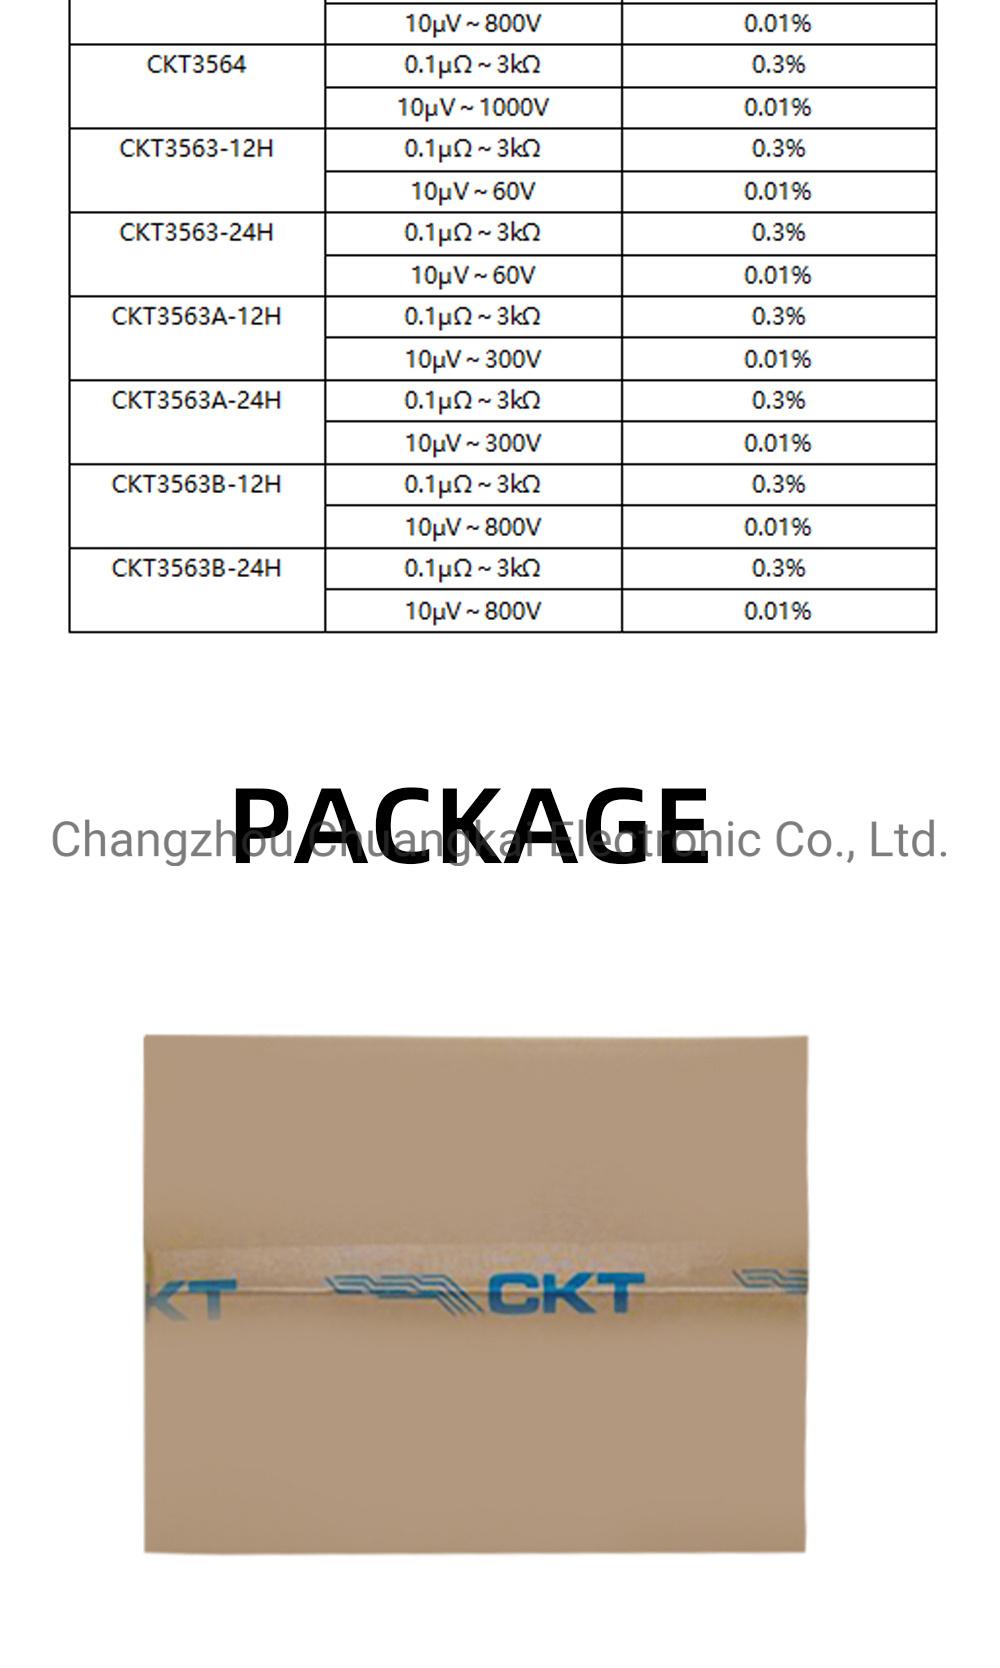 Ckt3563b Battery Meter Indicator Battery Storage Tester